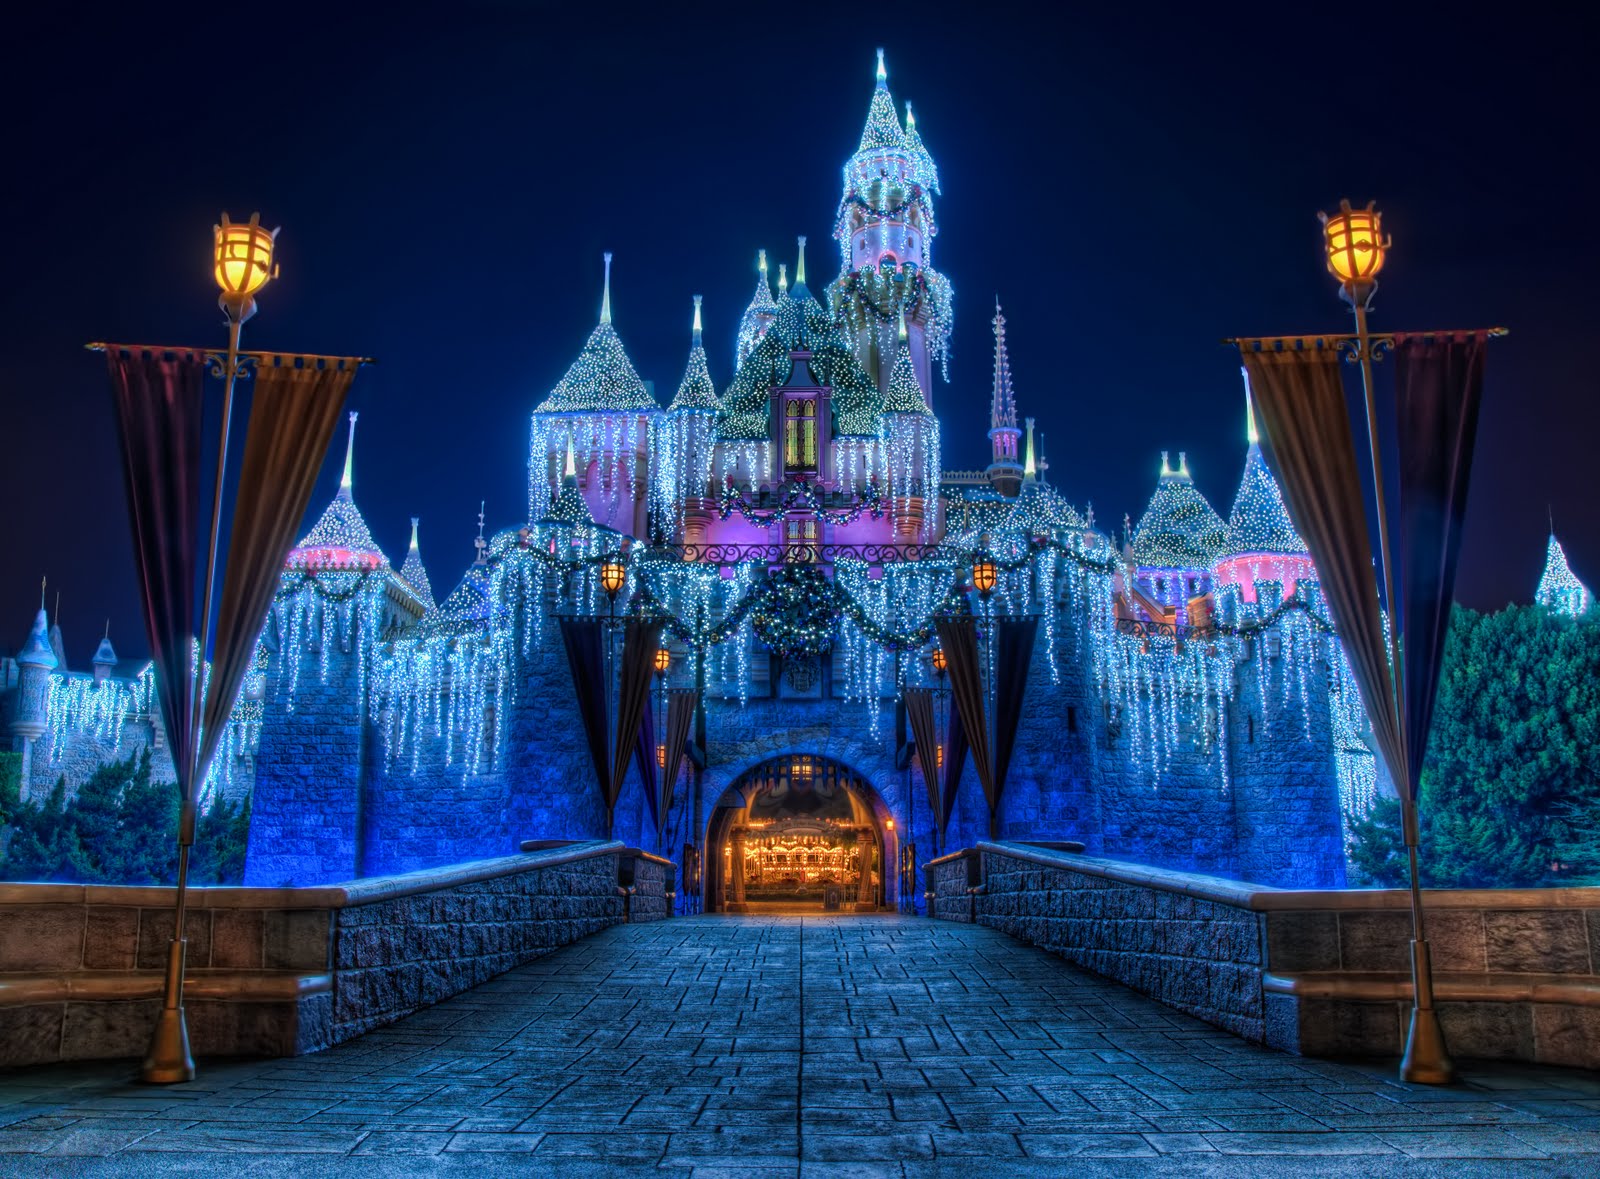  Wallpapers Disney Castle in Christmas Deskto Backgrounds Desktop 1600x1179